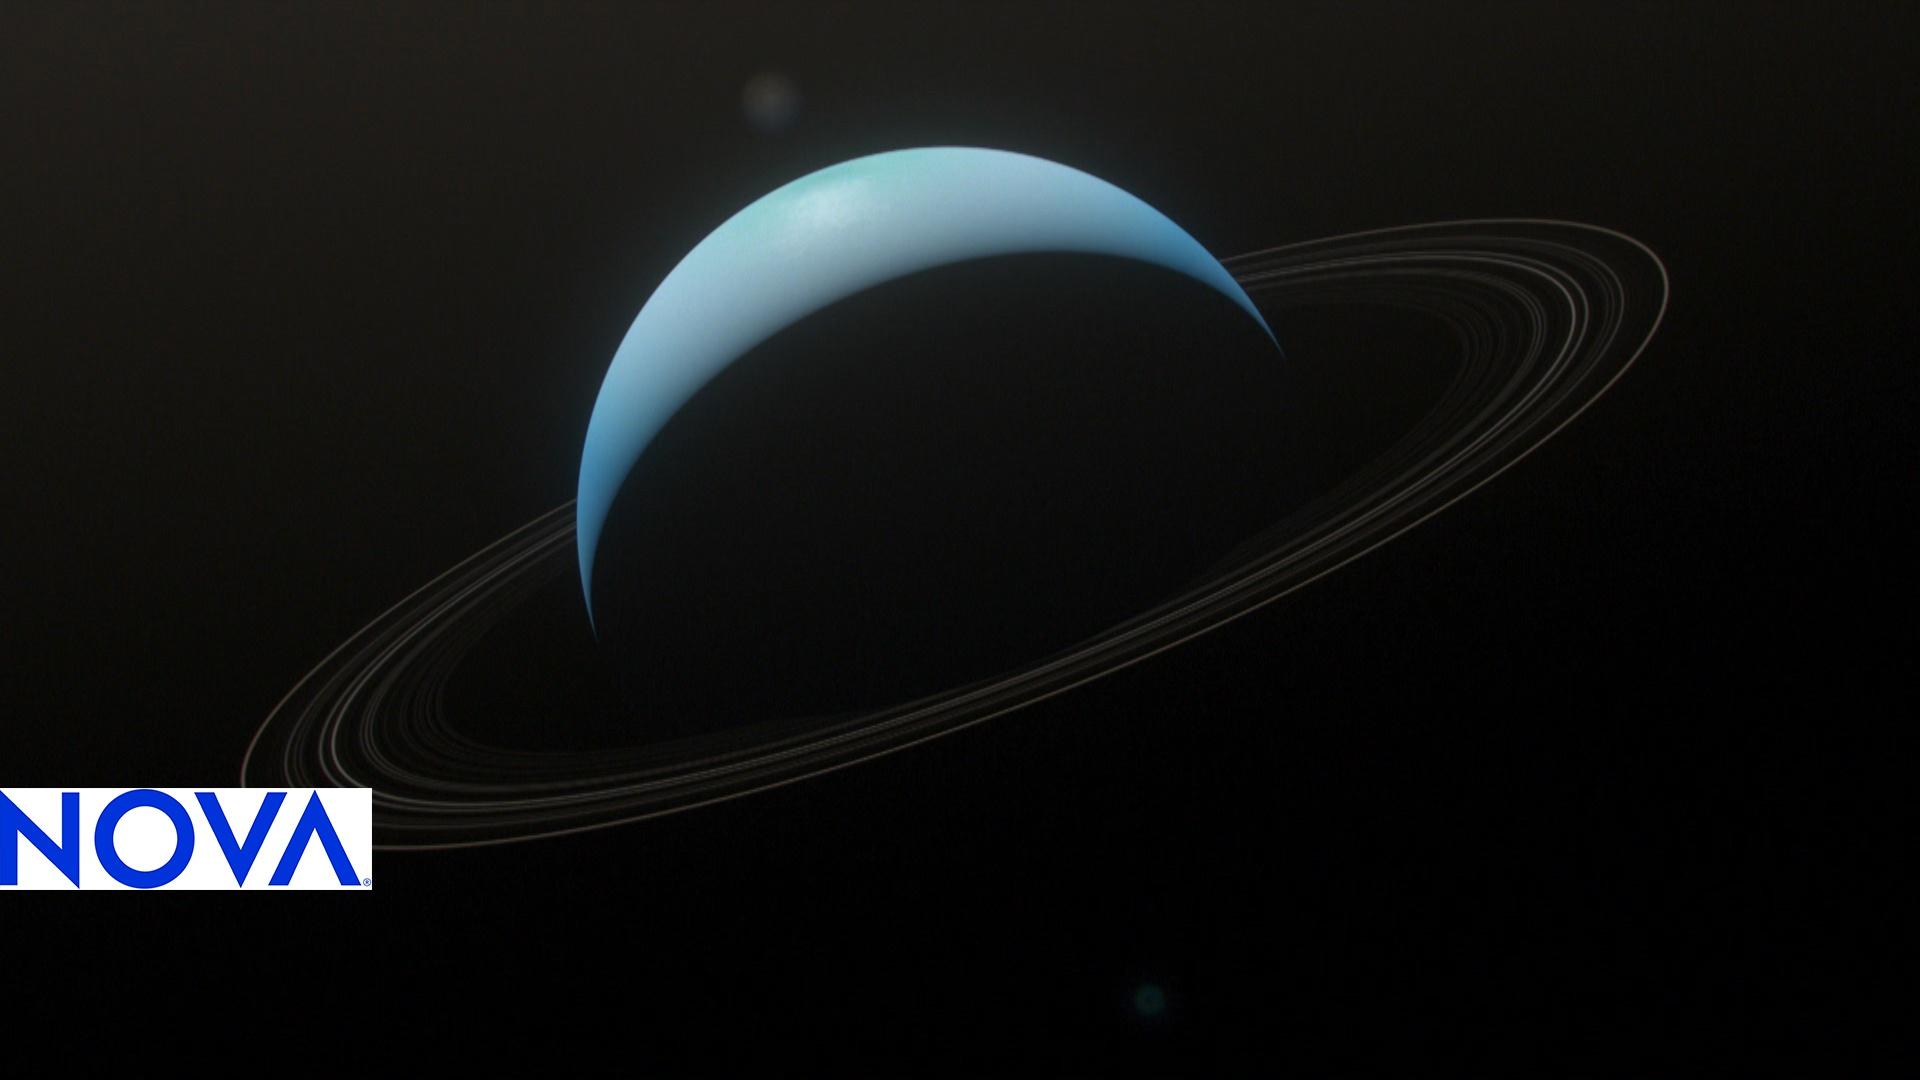 Planetary Rings of Uranus Glow in Cold Light | ALMA